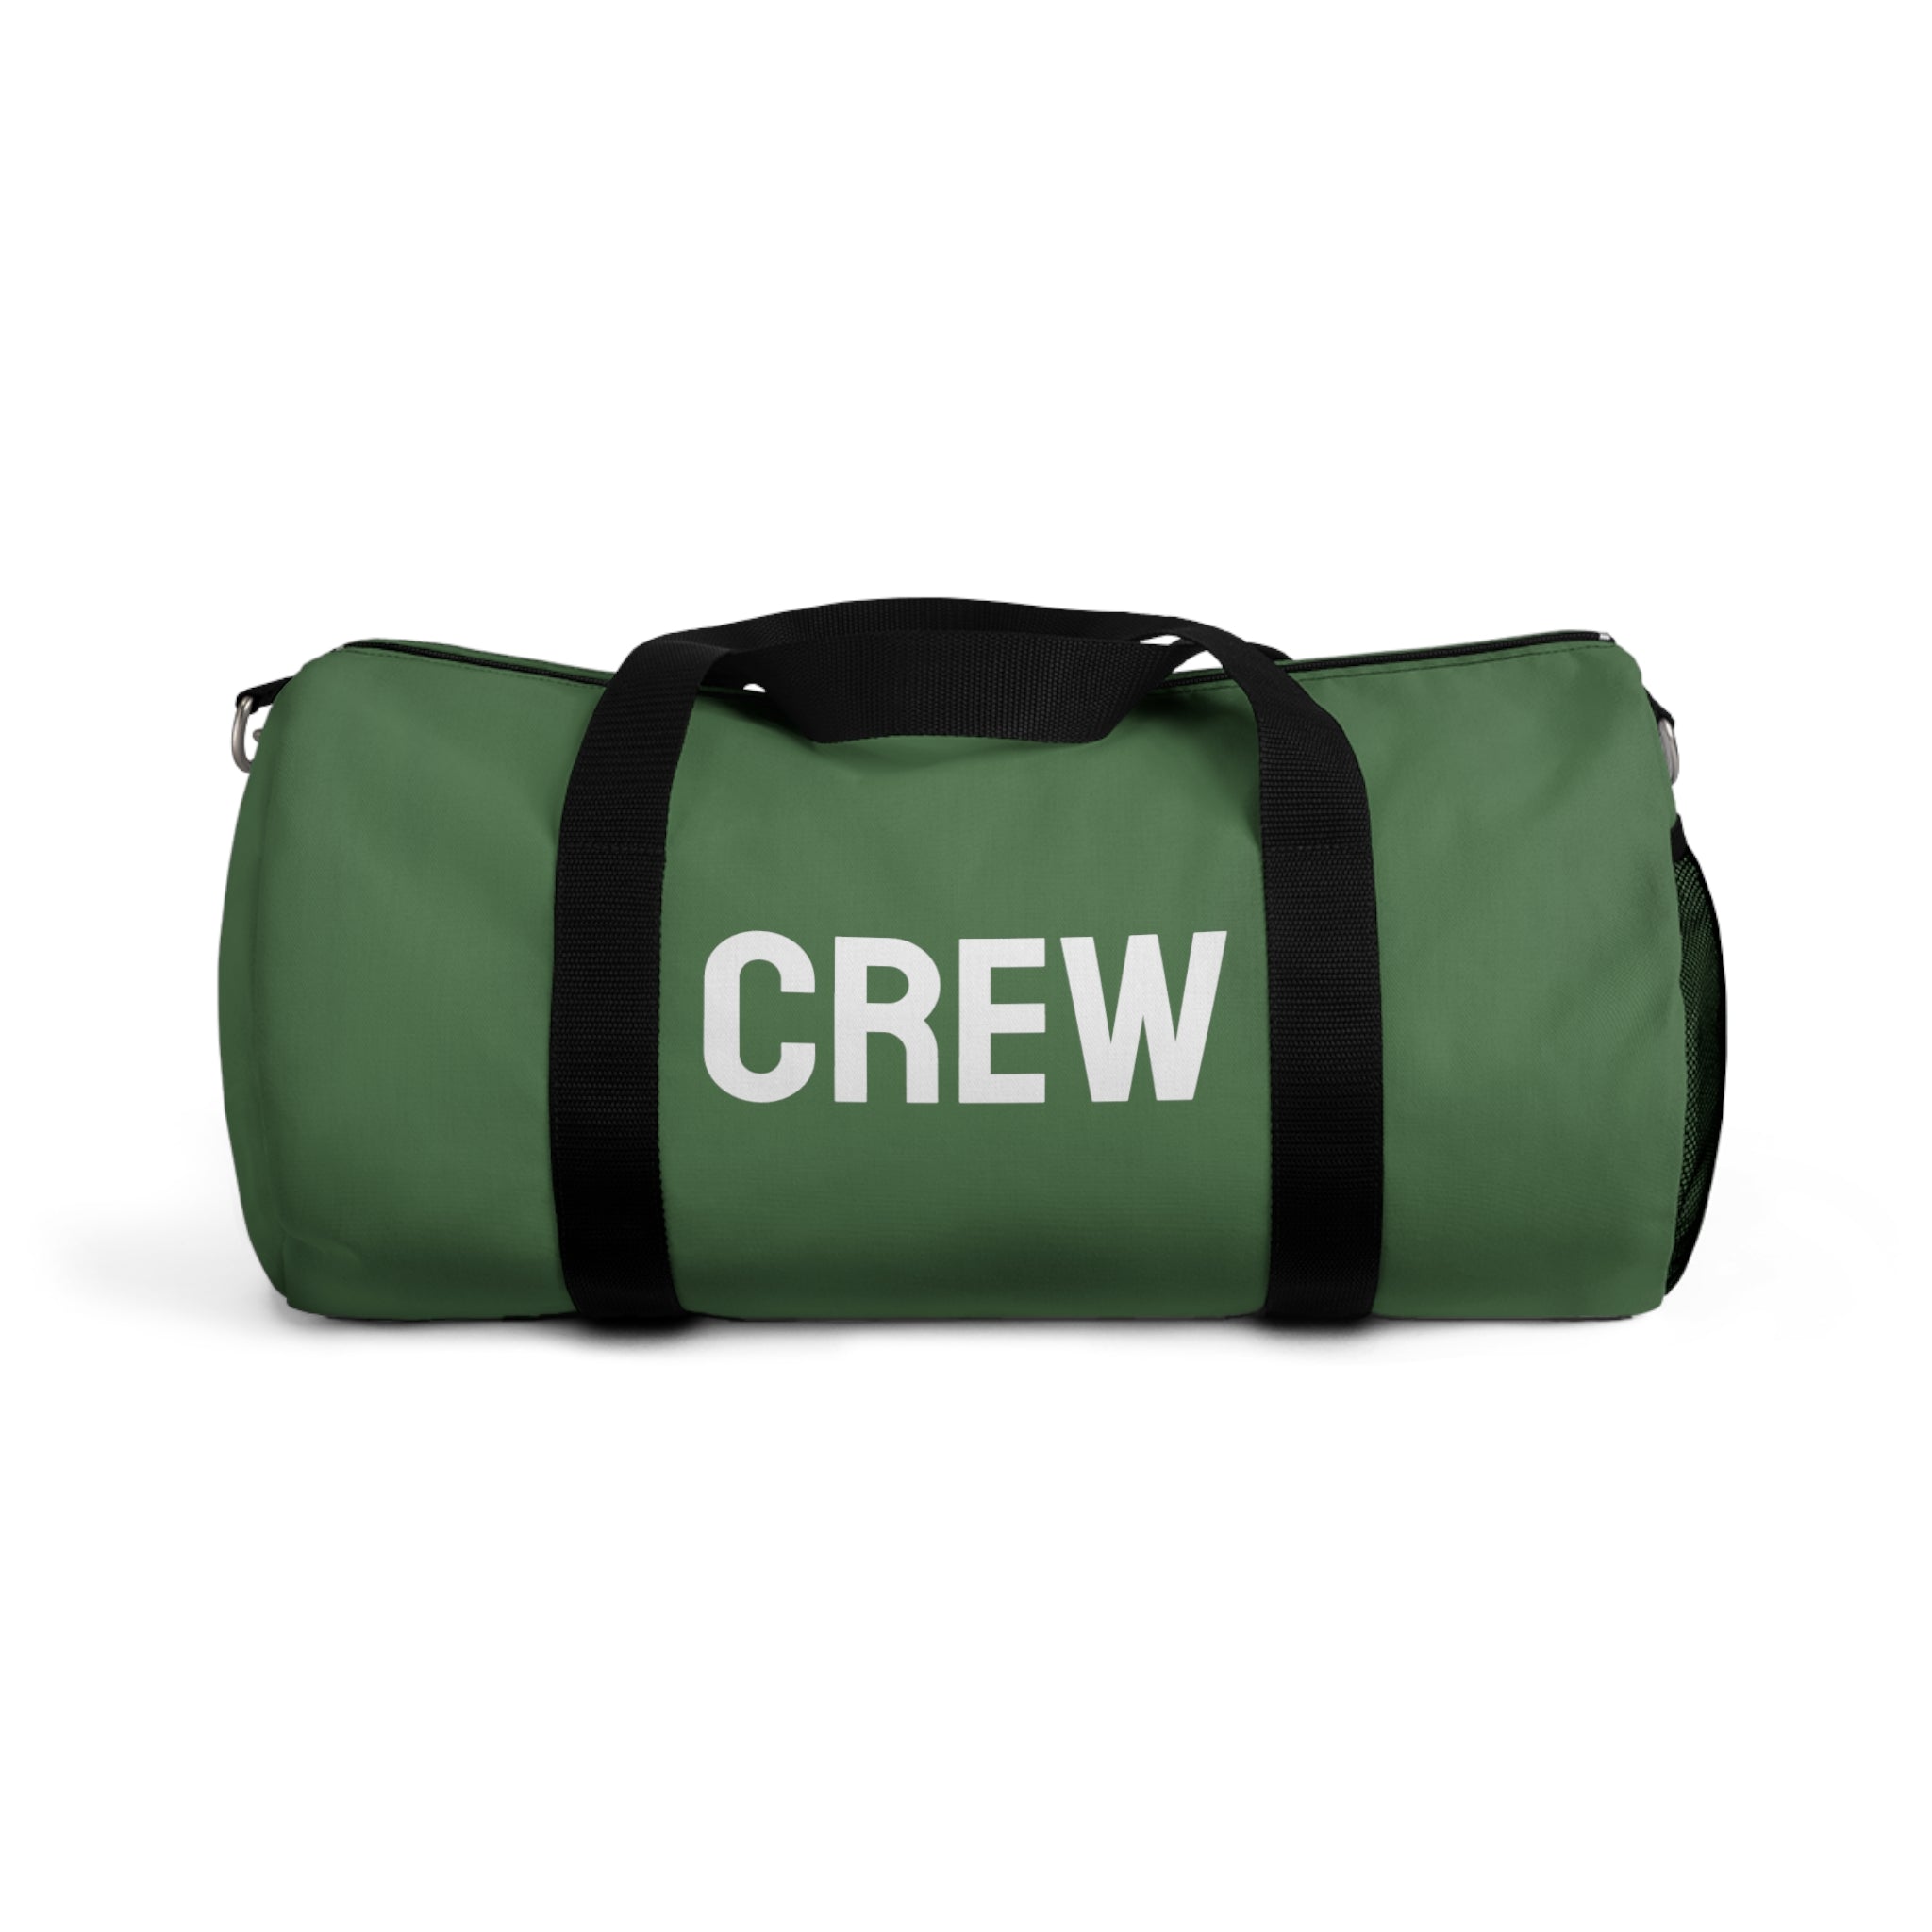 Crew Duffle Bag (Green)